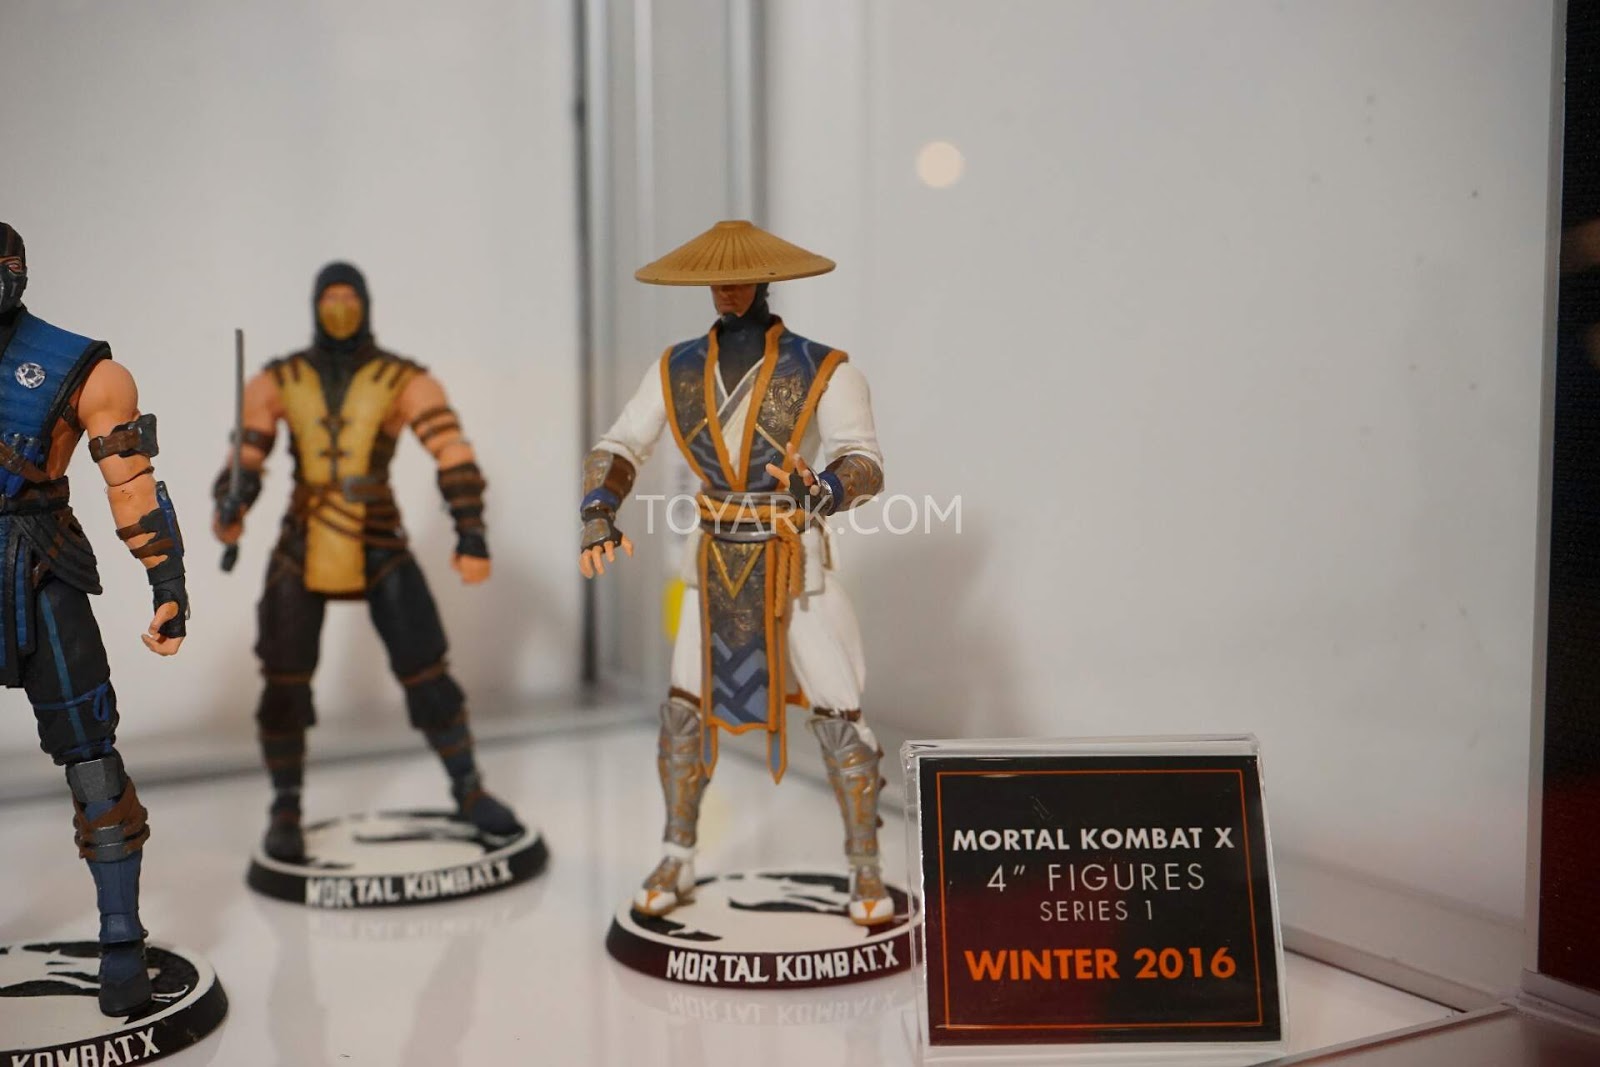 Three PREVIEWS Exclusive Mortal Kombat X Action Figures Head to Comic Shops  - NerdSpan